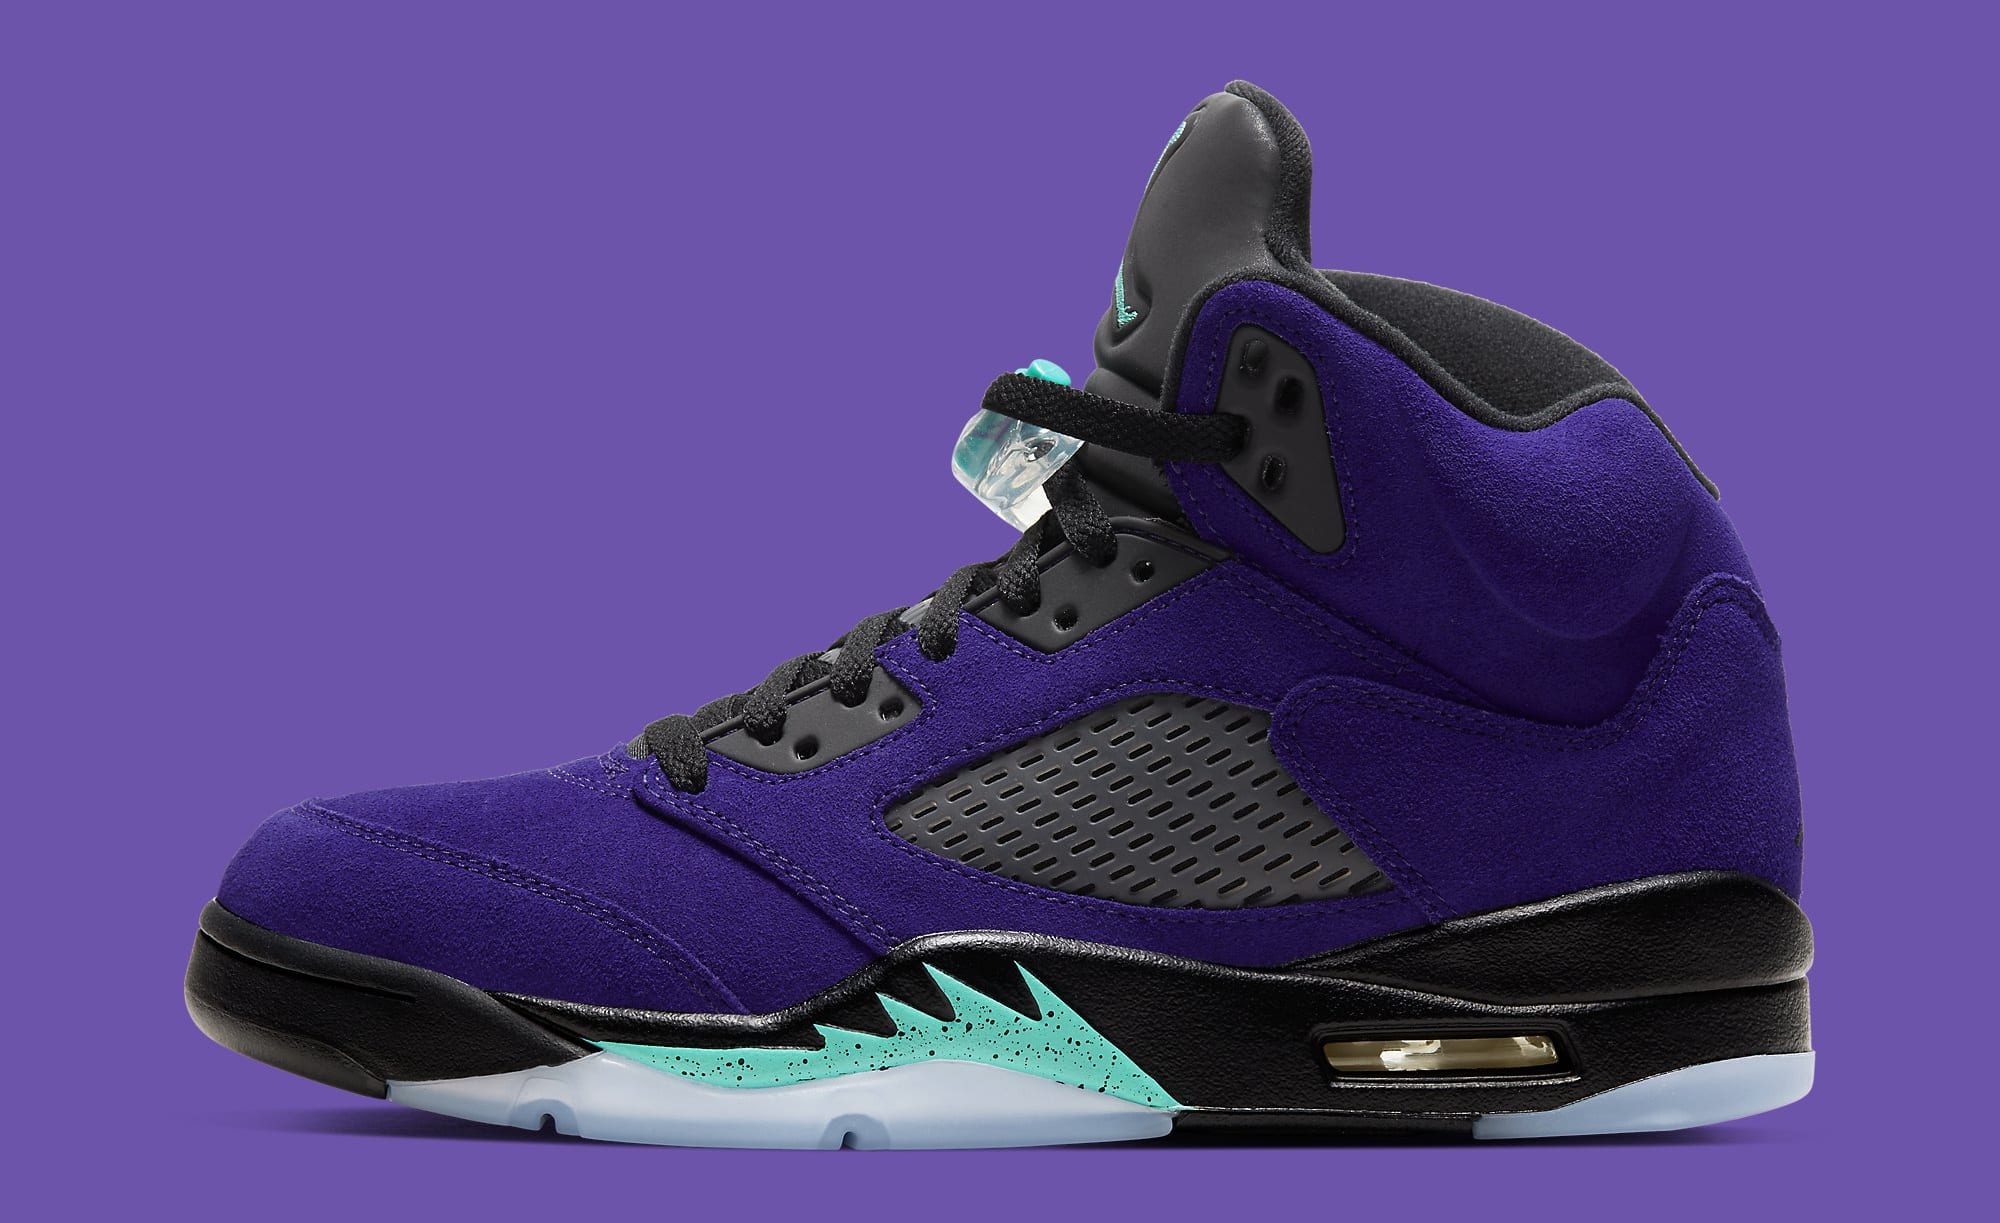 Sneakers Release – Jordan 5 Retro “Alternate Grape” Grape  Ice/New Emerald Men’s Basketball Shoe